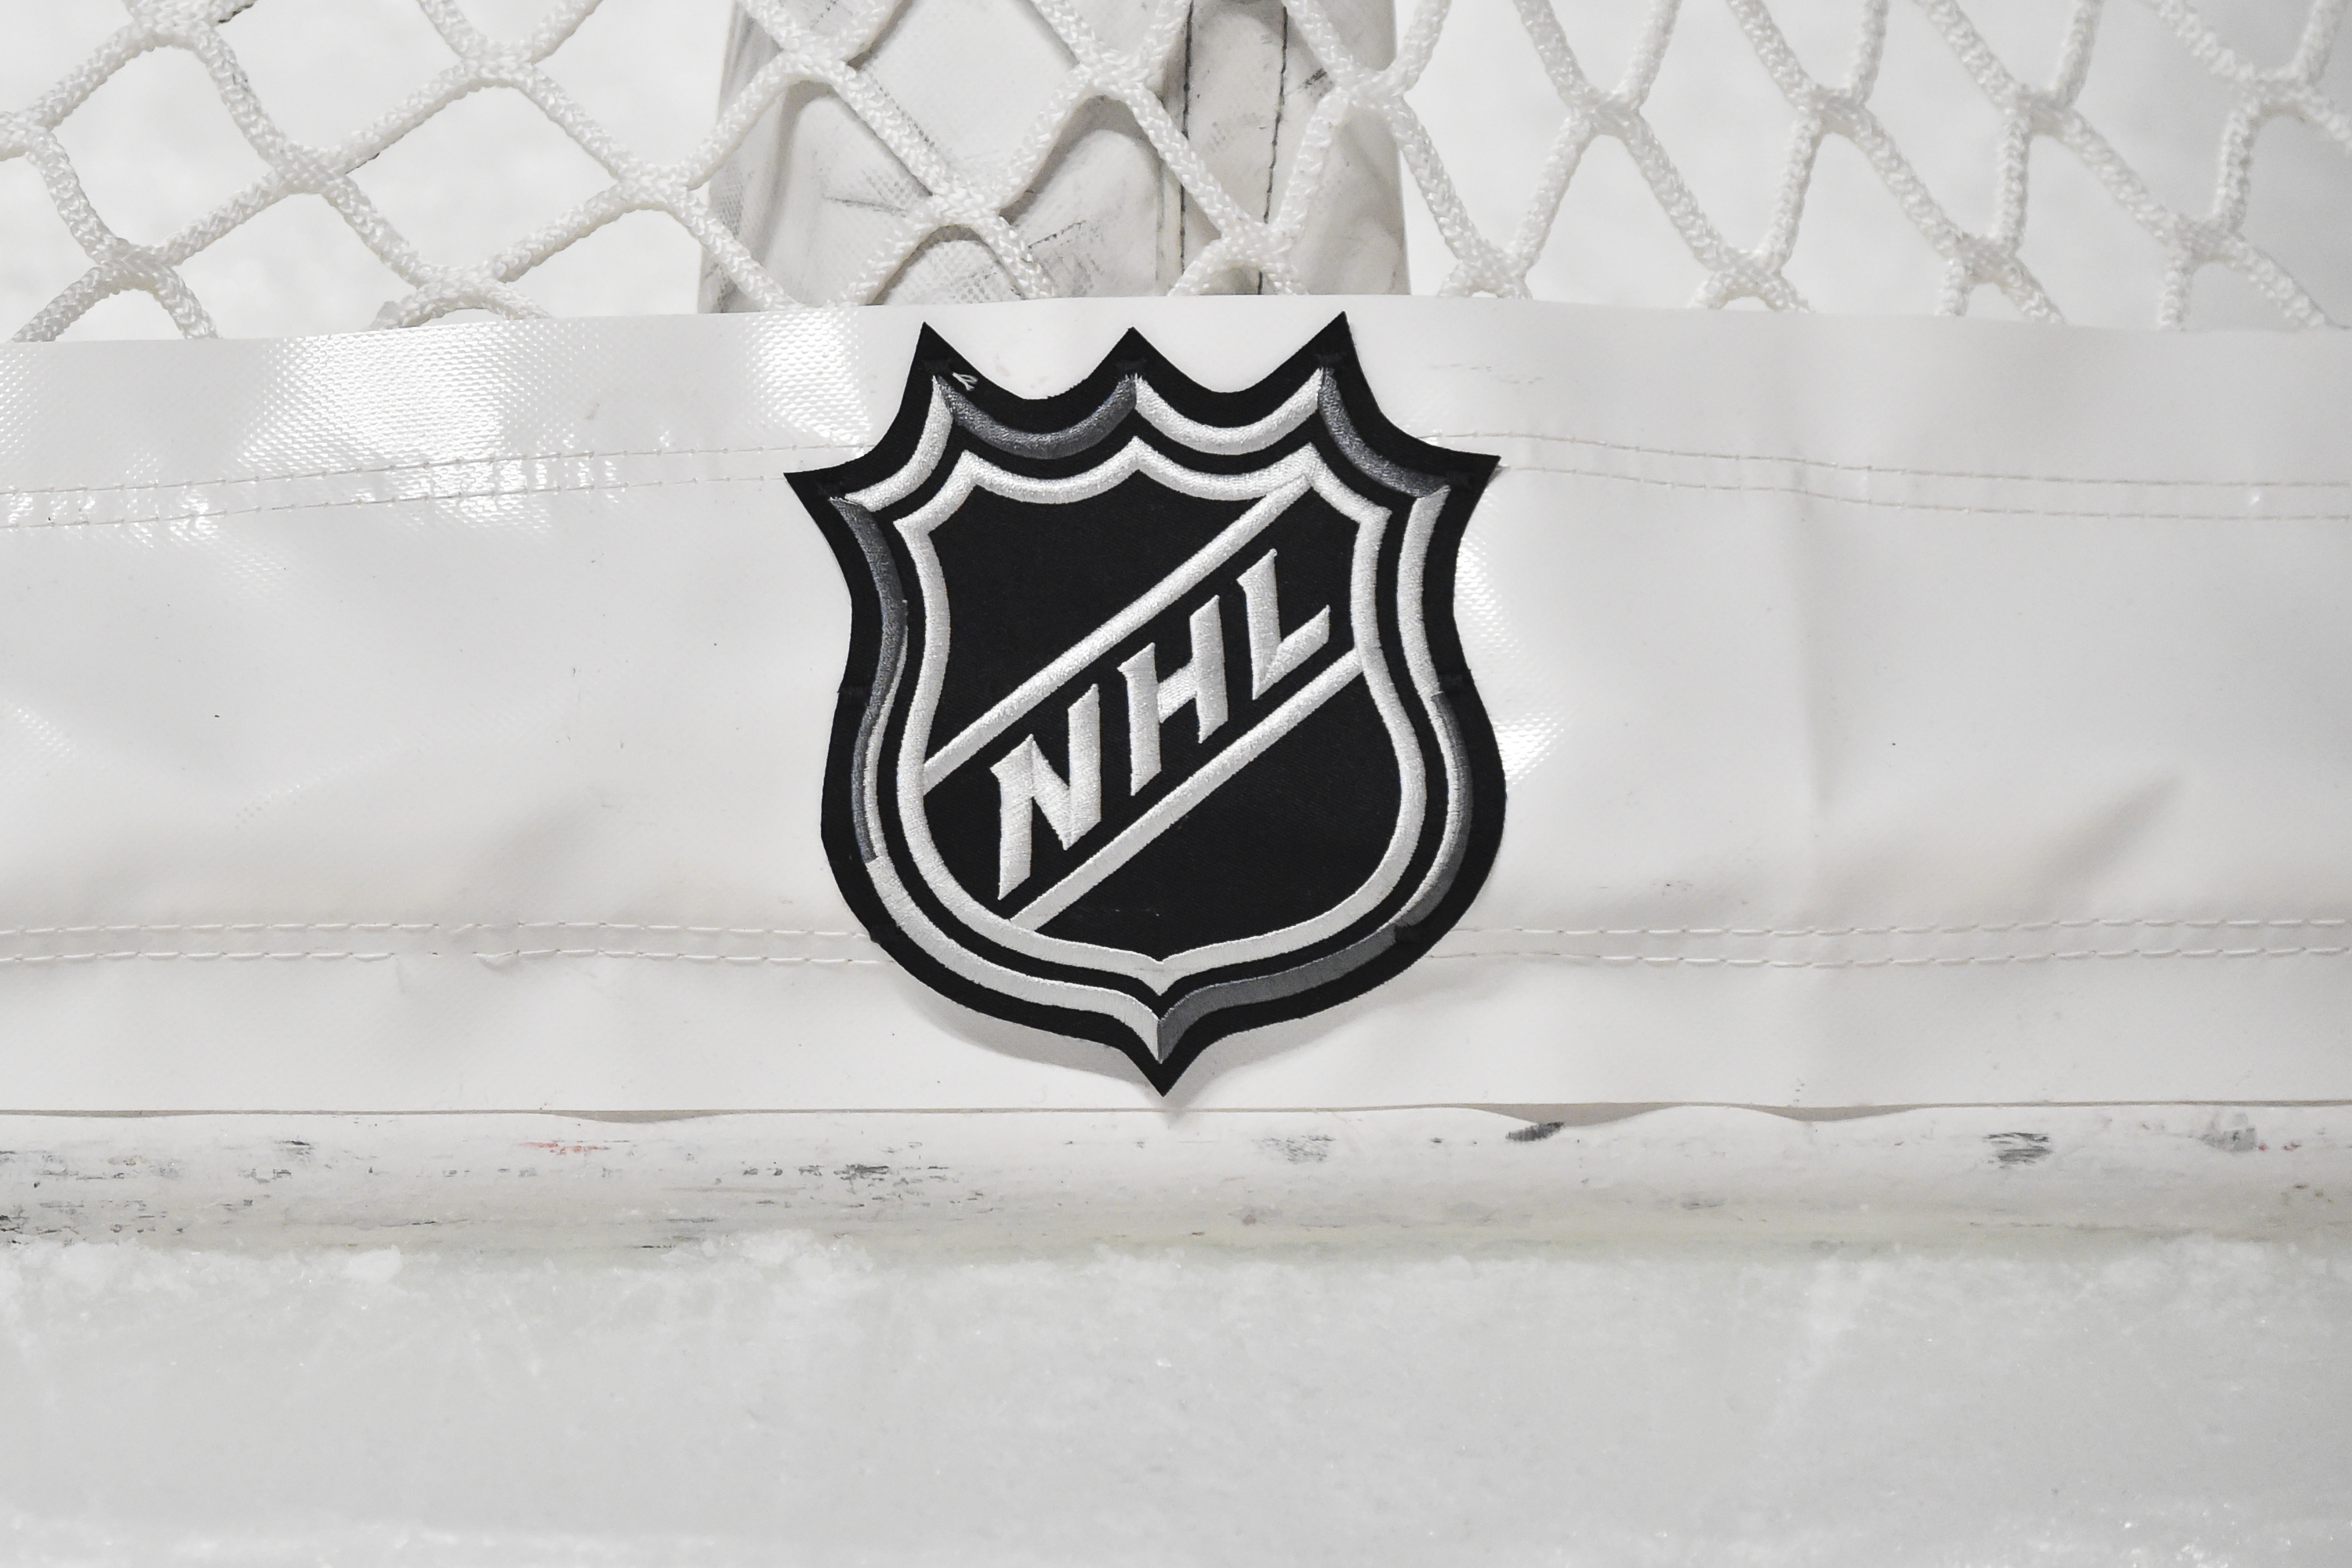 NHL, NHLPA Agree to Continue Season amid COVID-19; Olympic Participation TBD